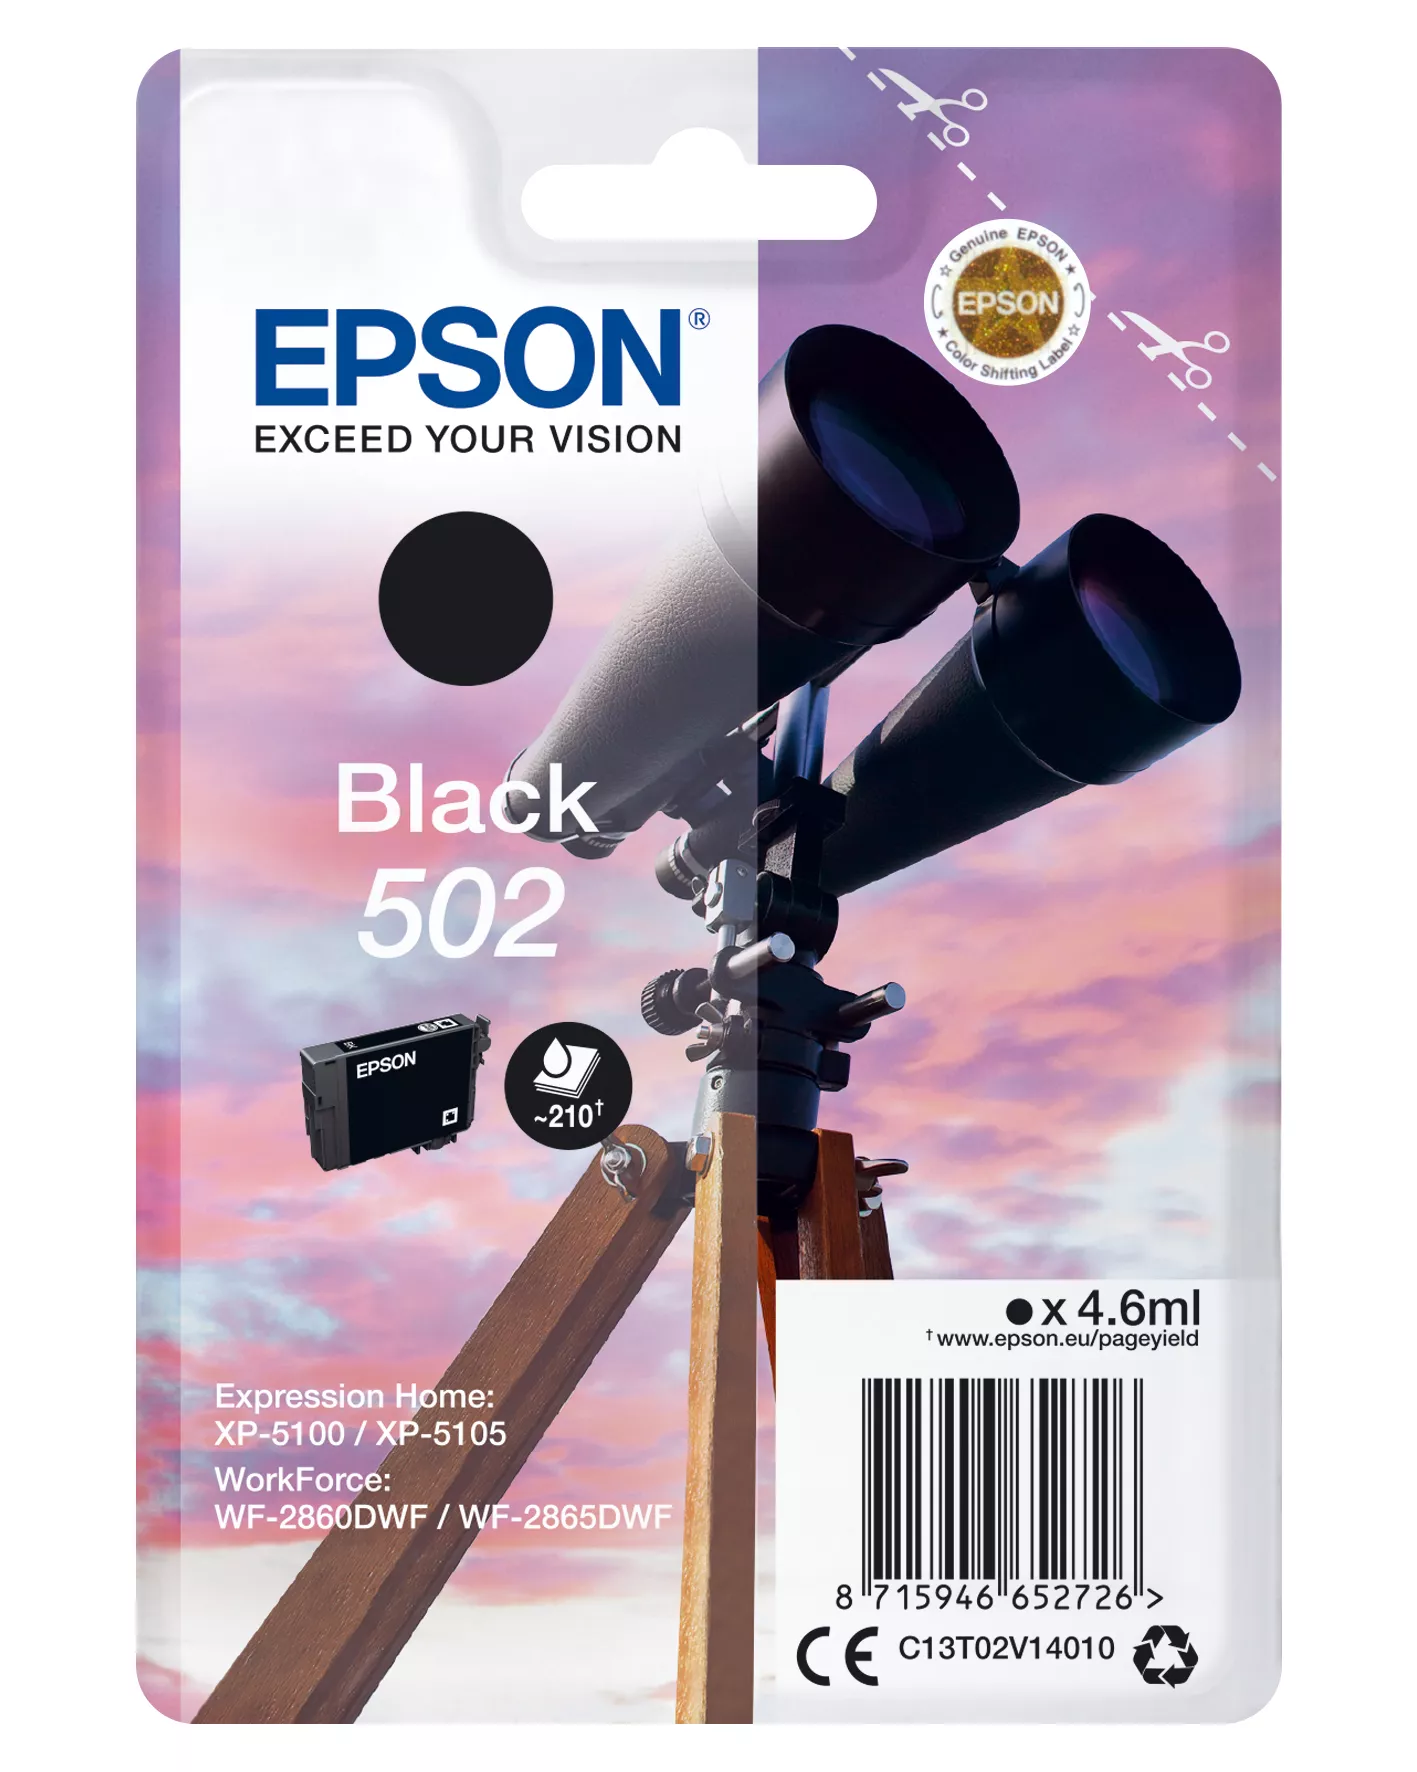 Achat EPSON Singlepack Black 502 Ink SEC au meilleur prix